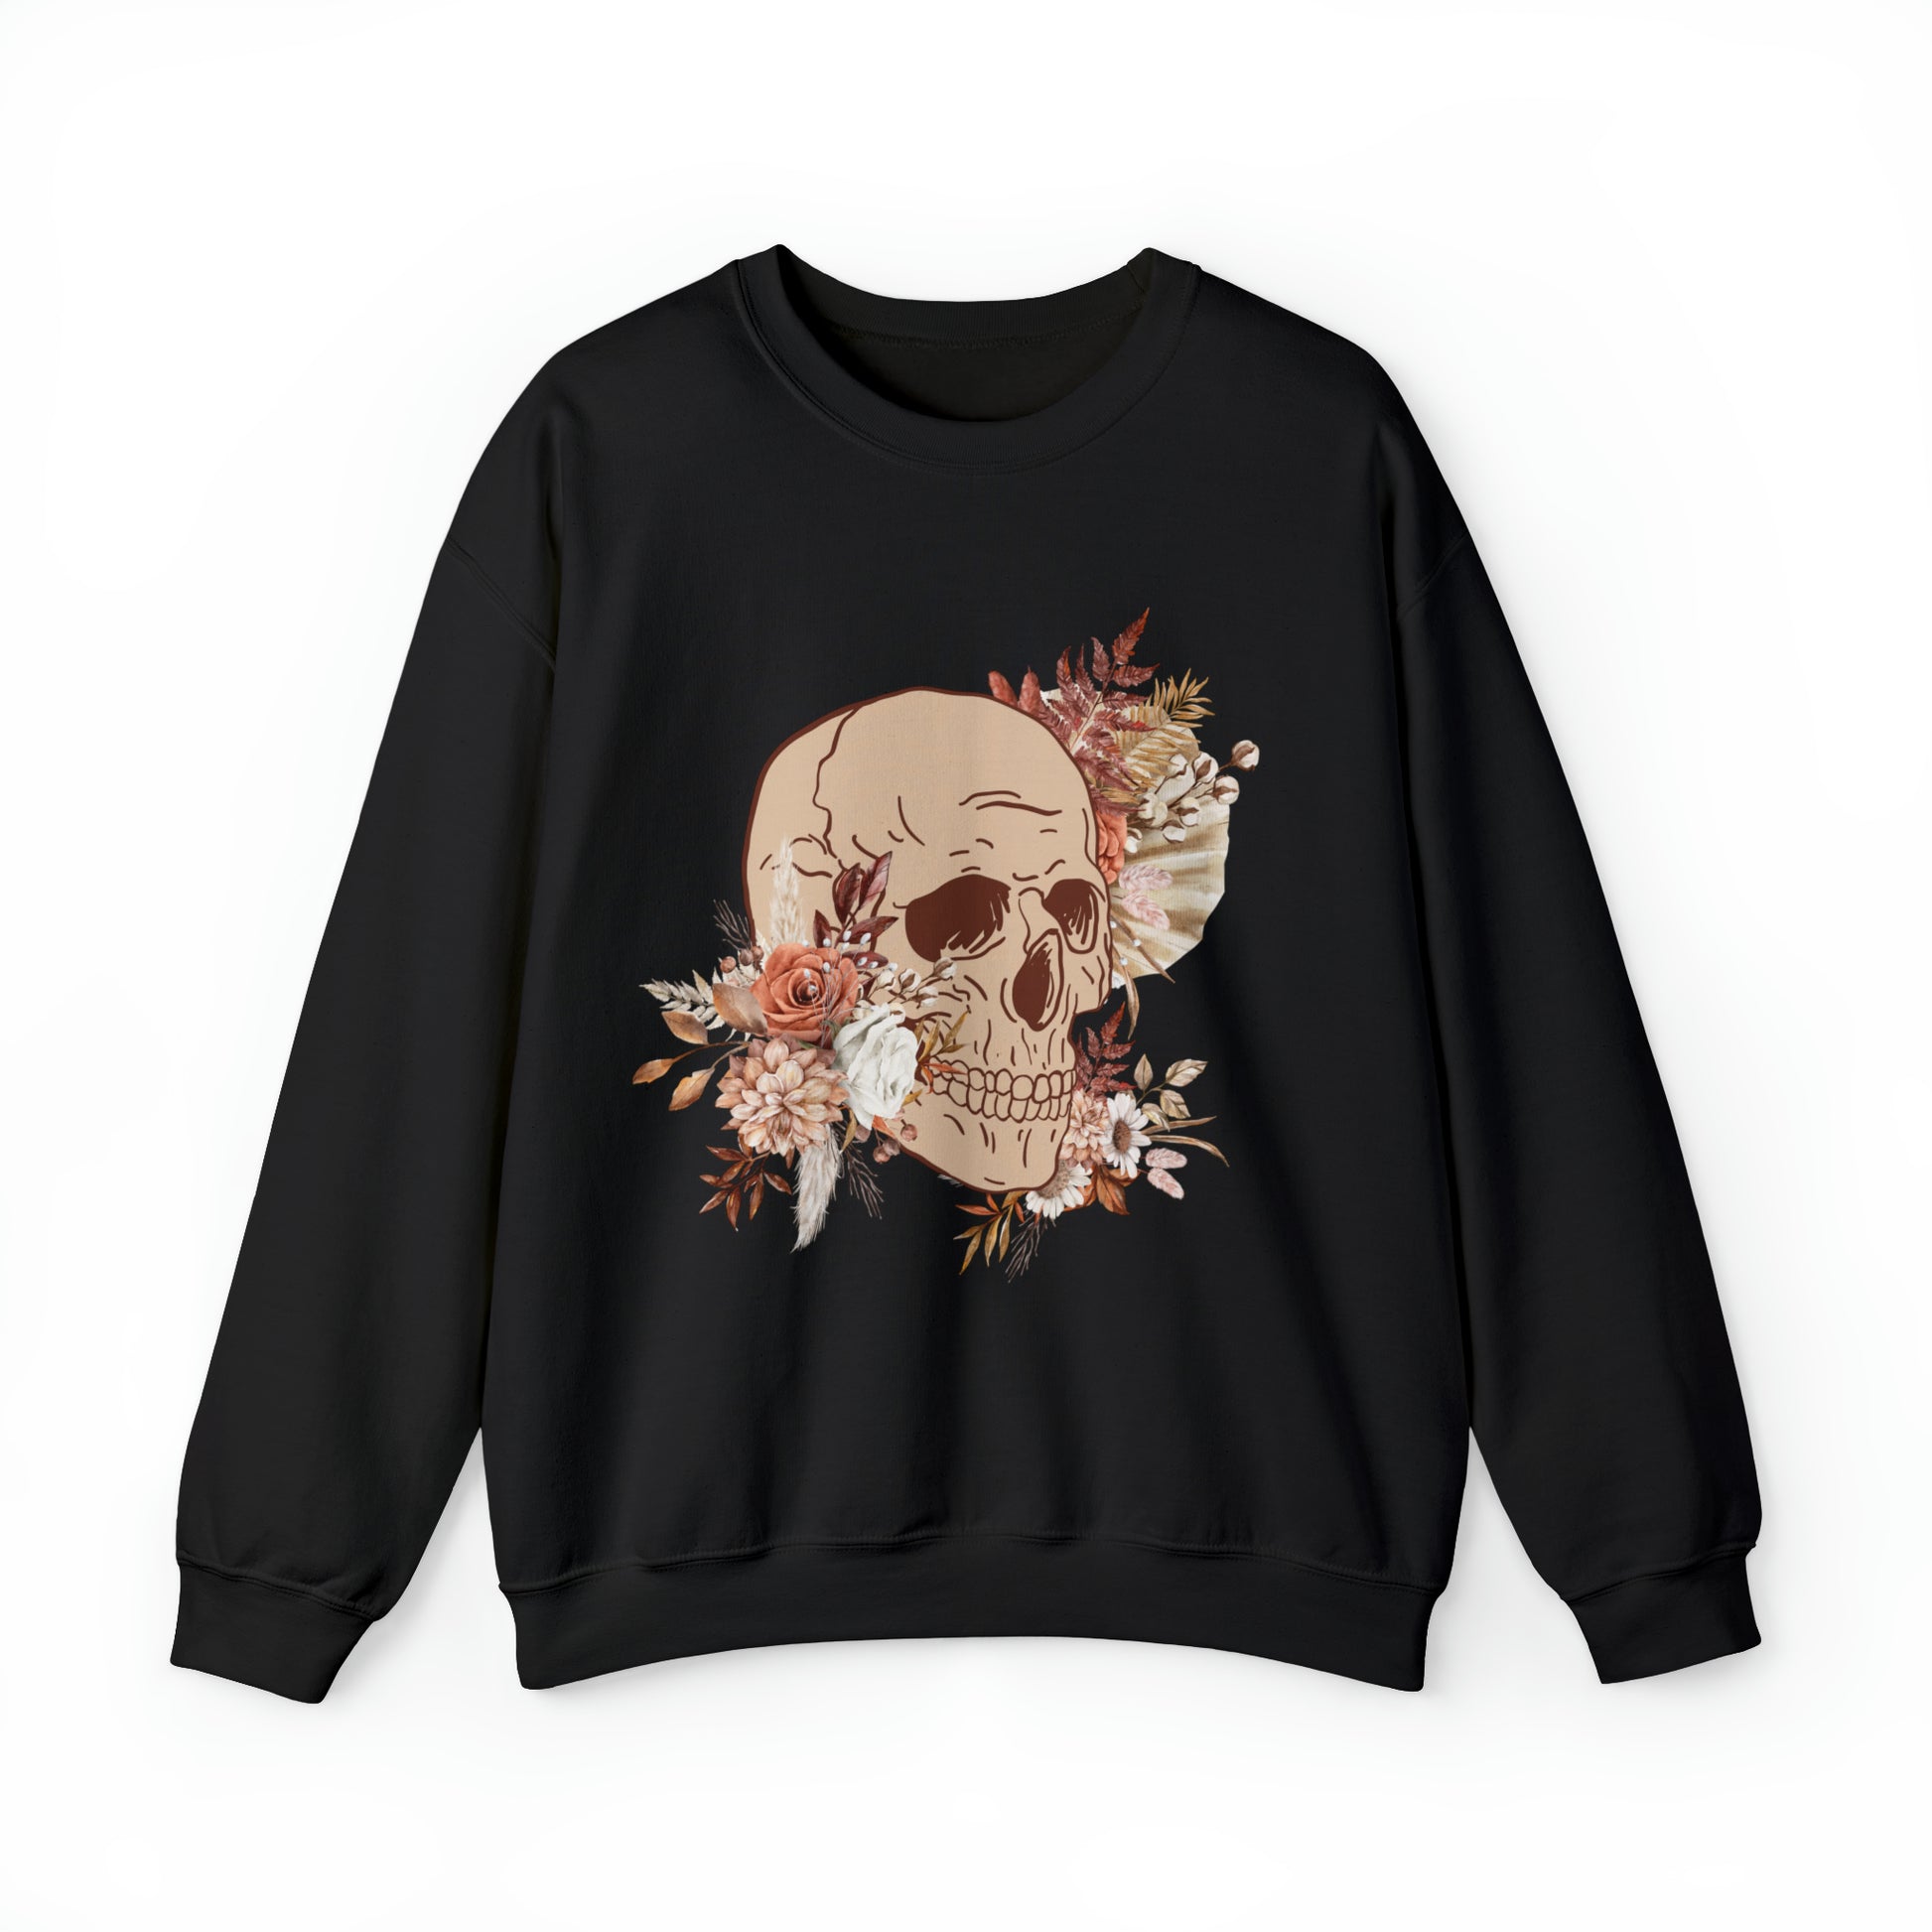 Unisex Vintage Skull and Flower Heavy Blend Crewneck Sweatshirt black front